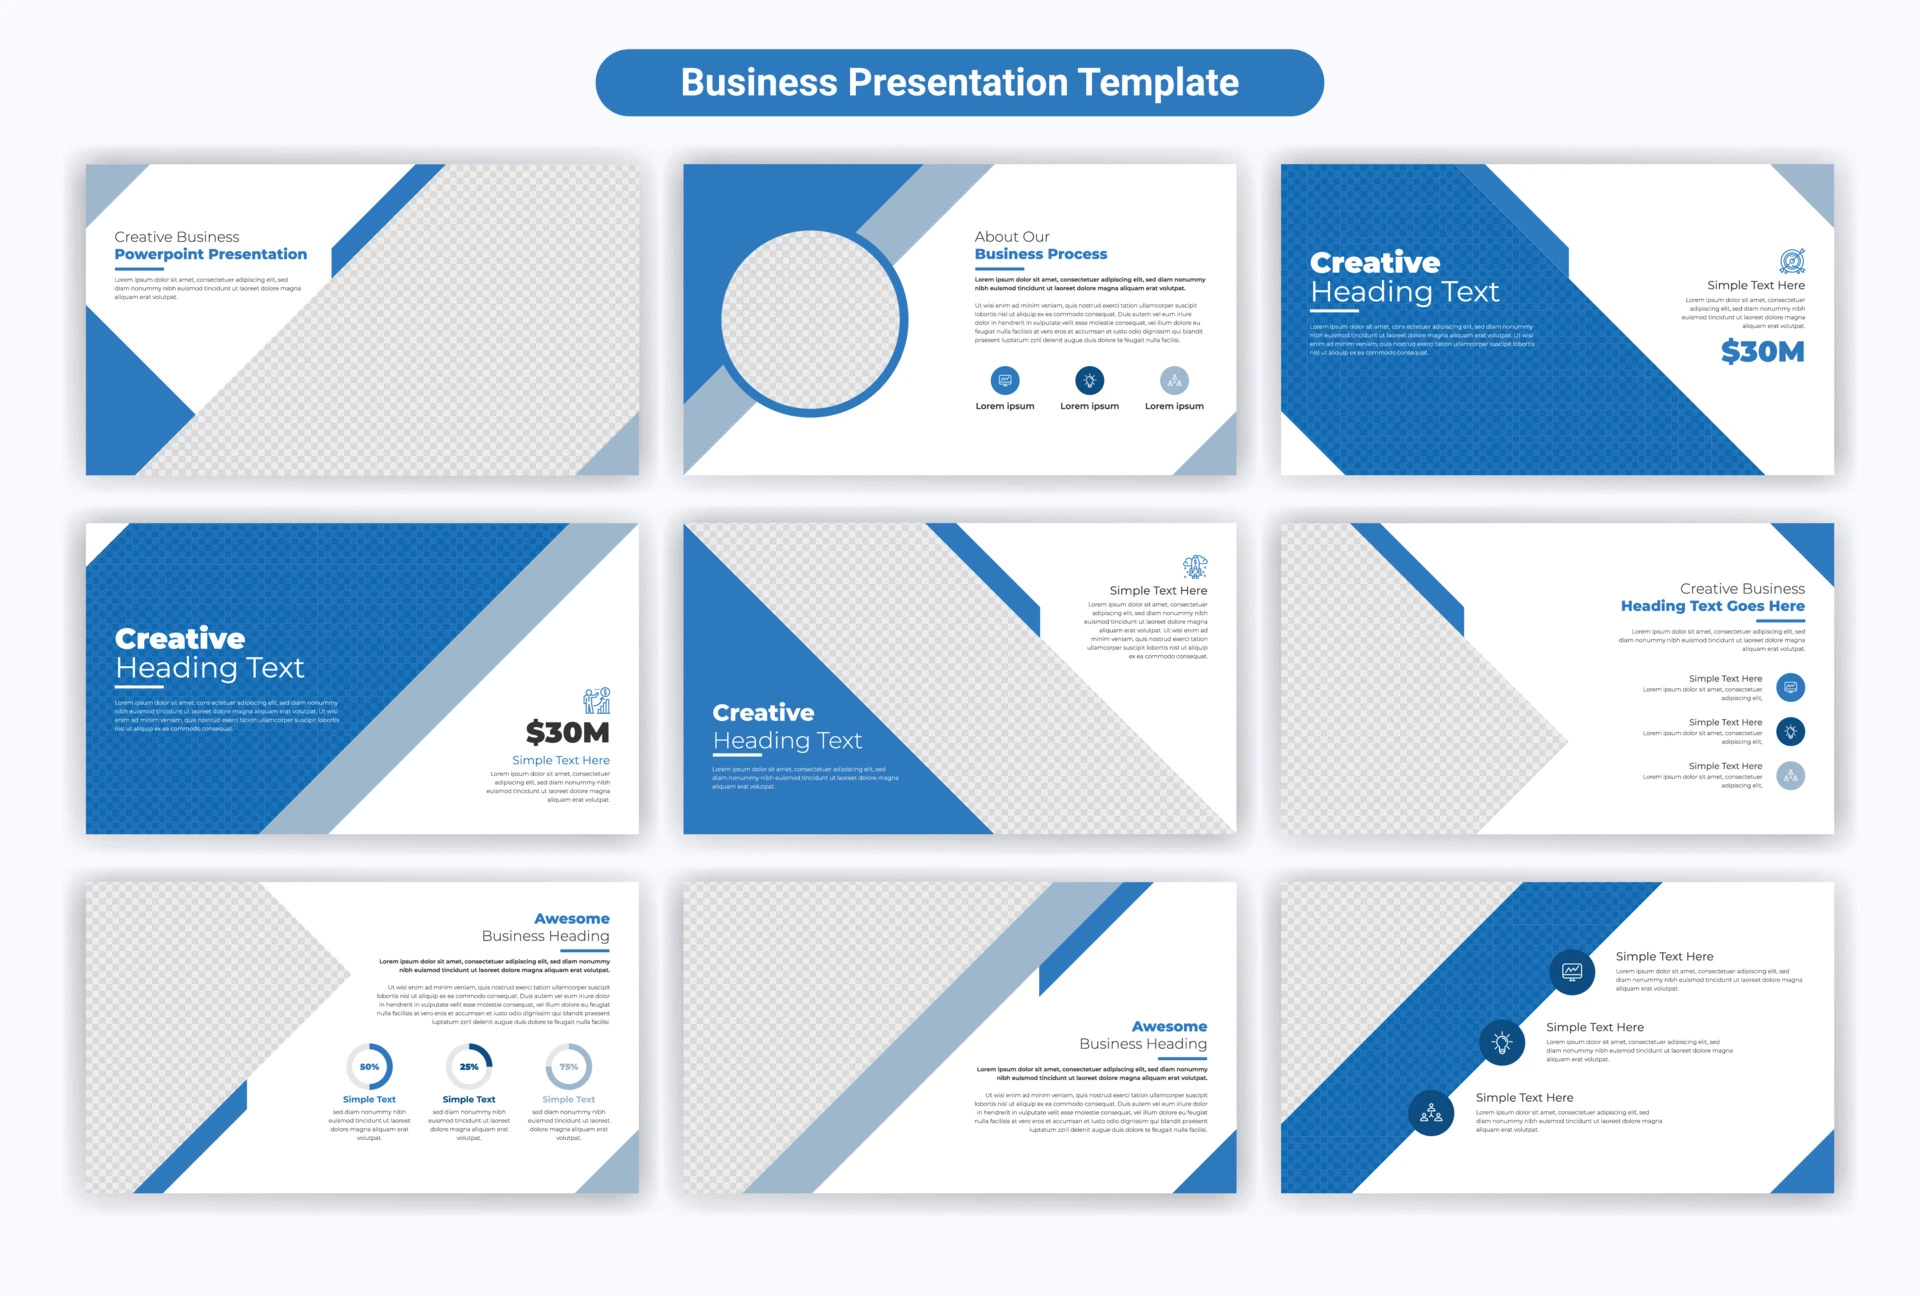 A simple business presentation template